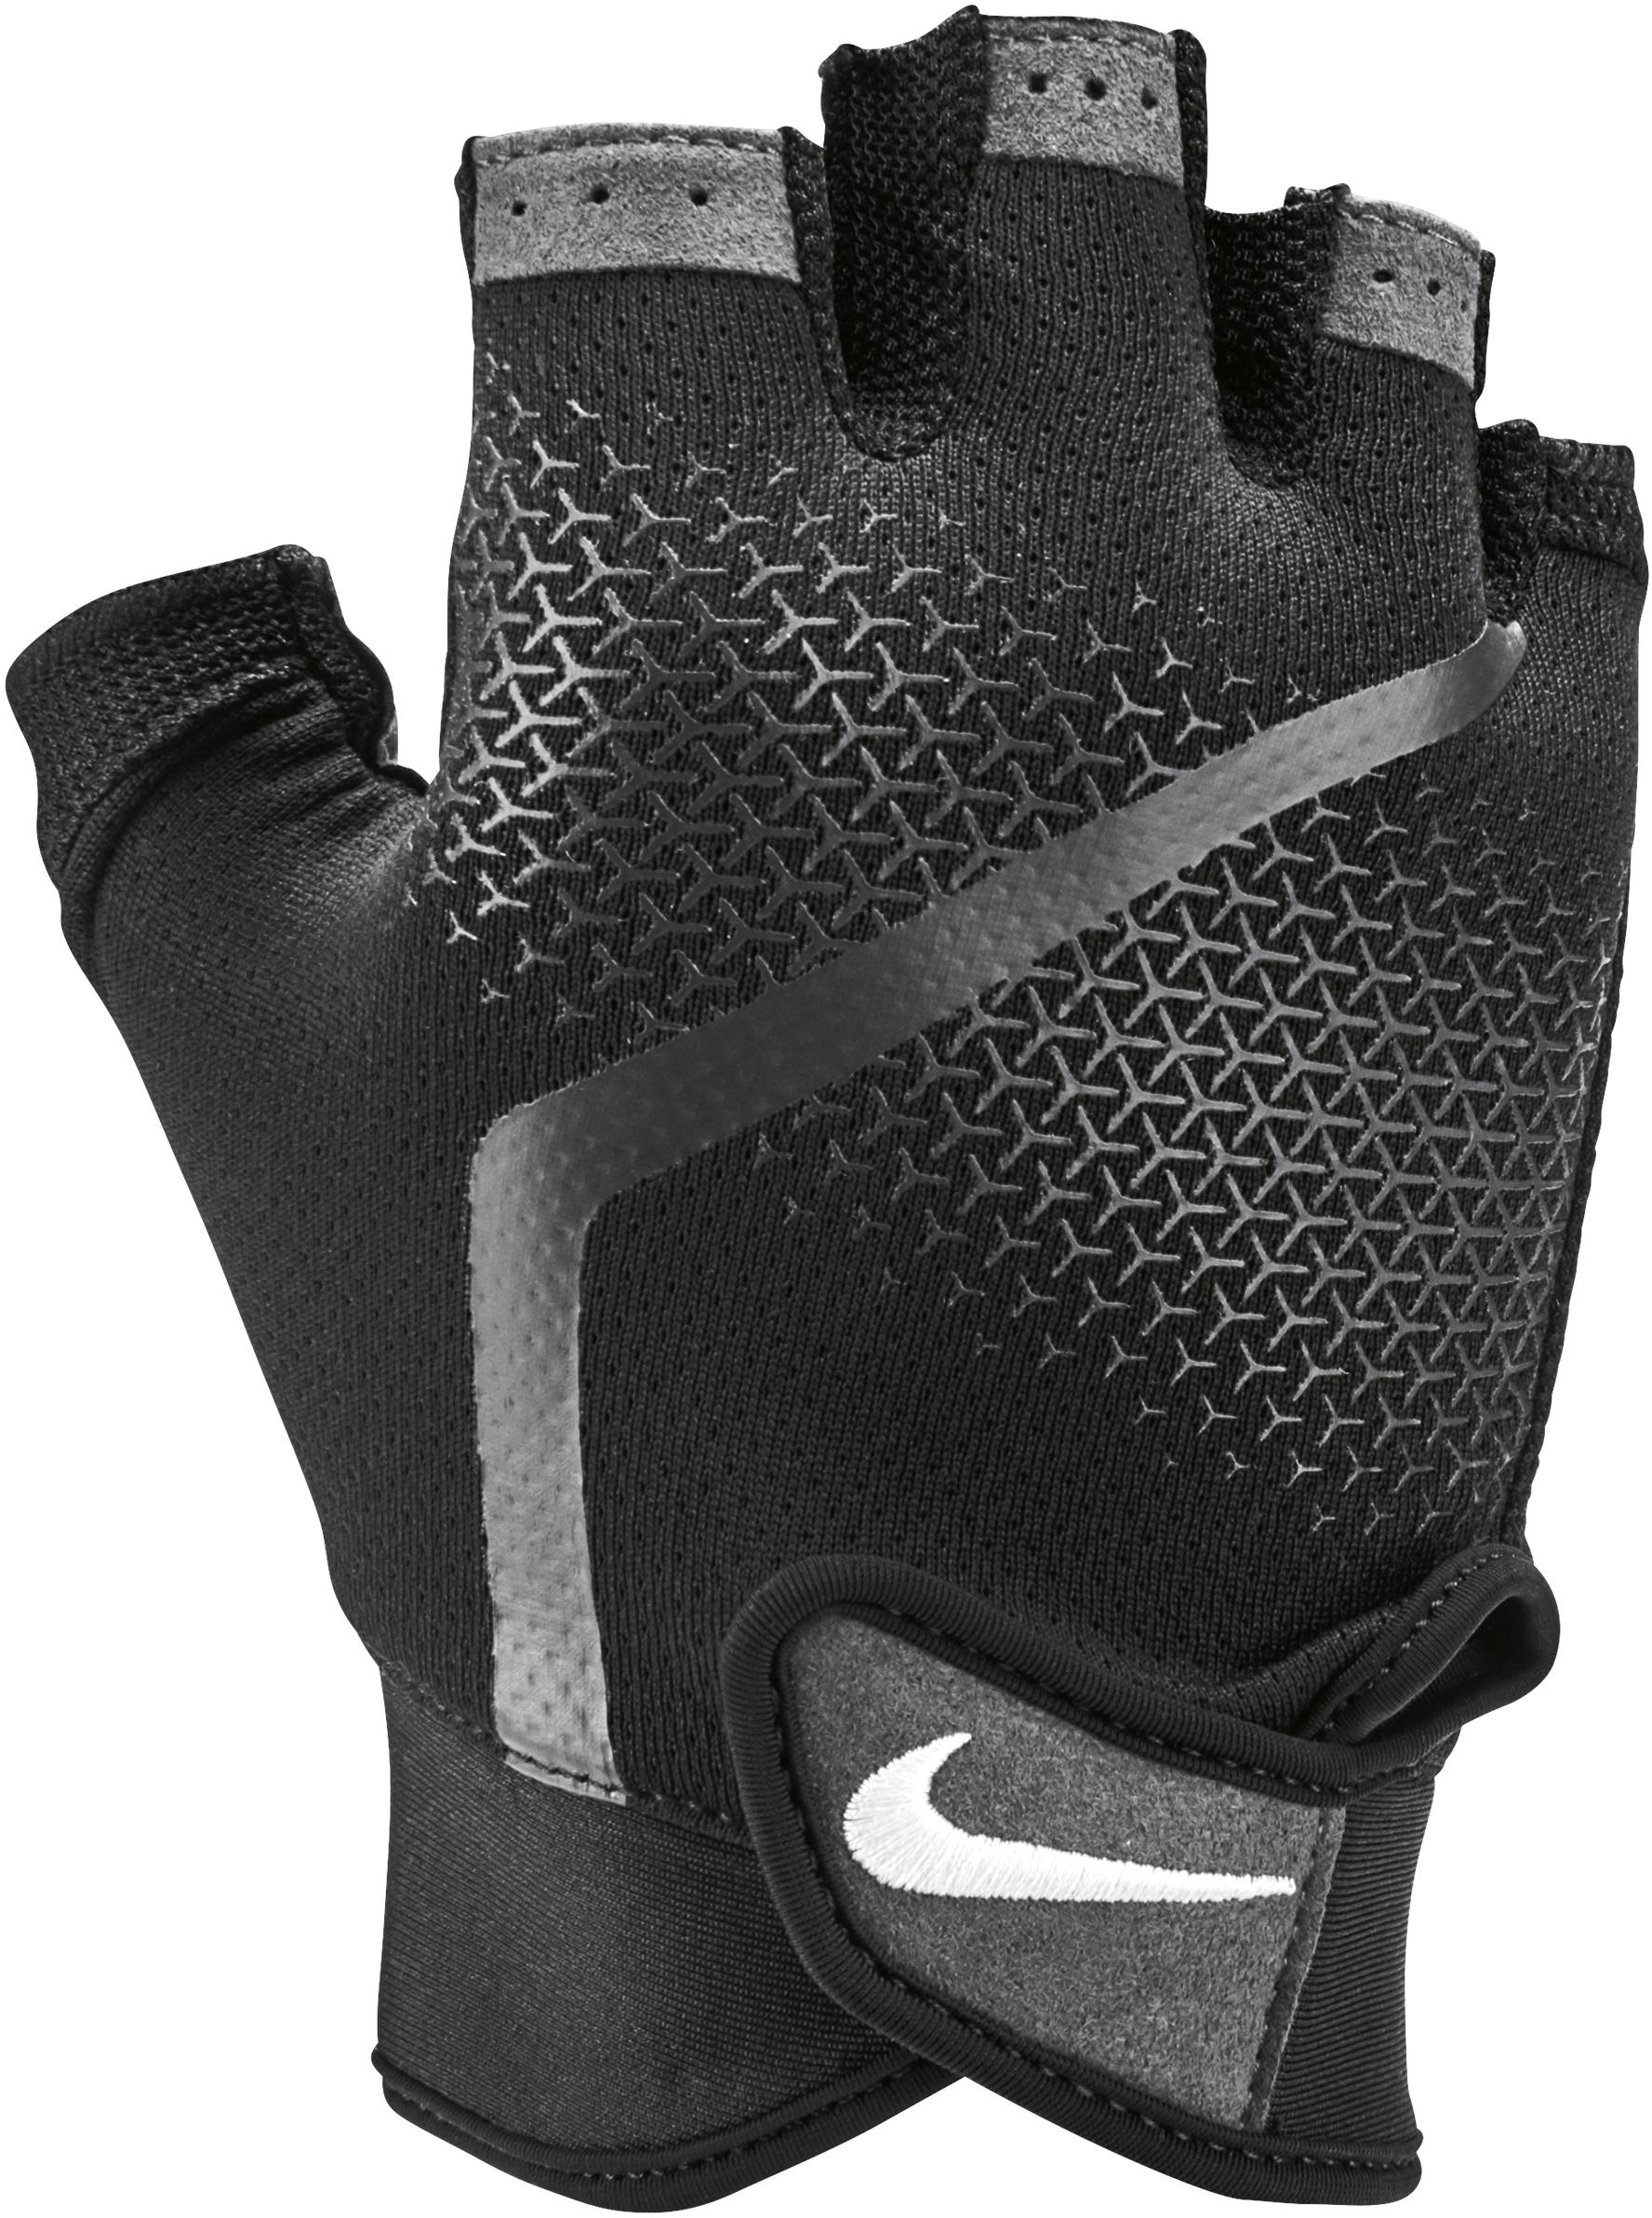 Nike Extreme Fitness Gloves - Black/anthracite/white